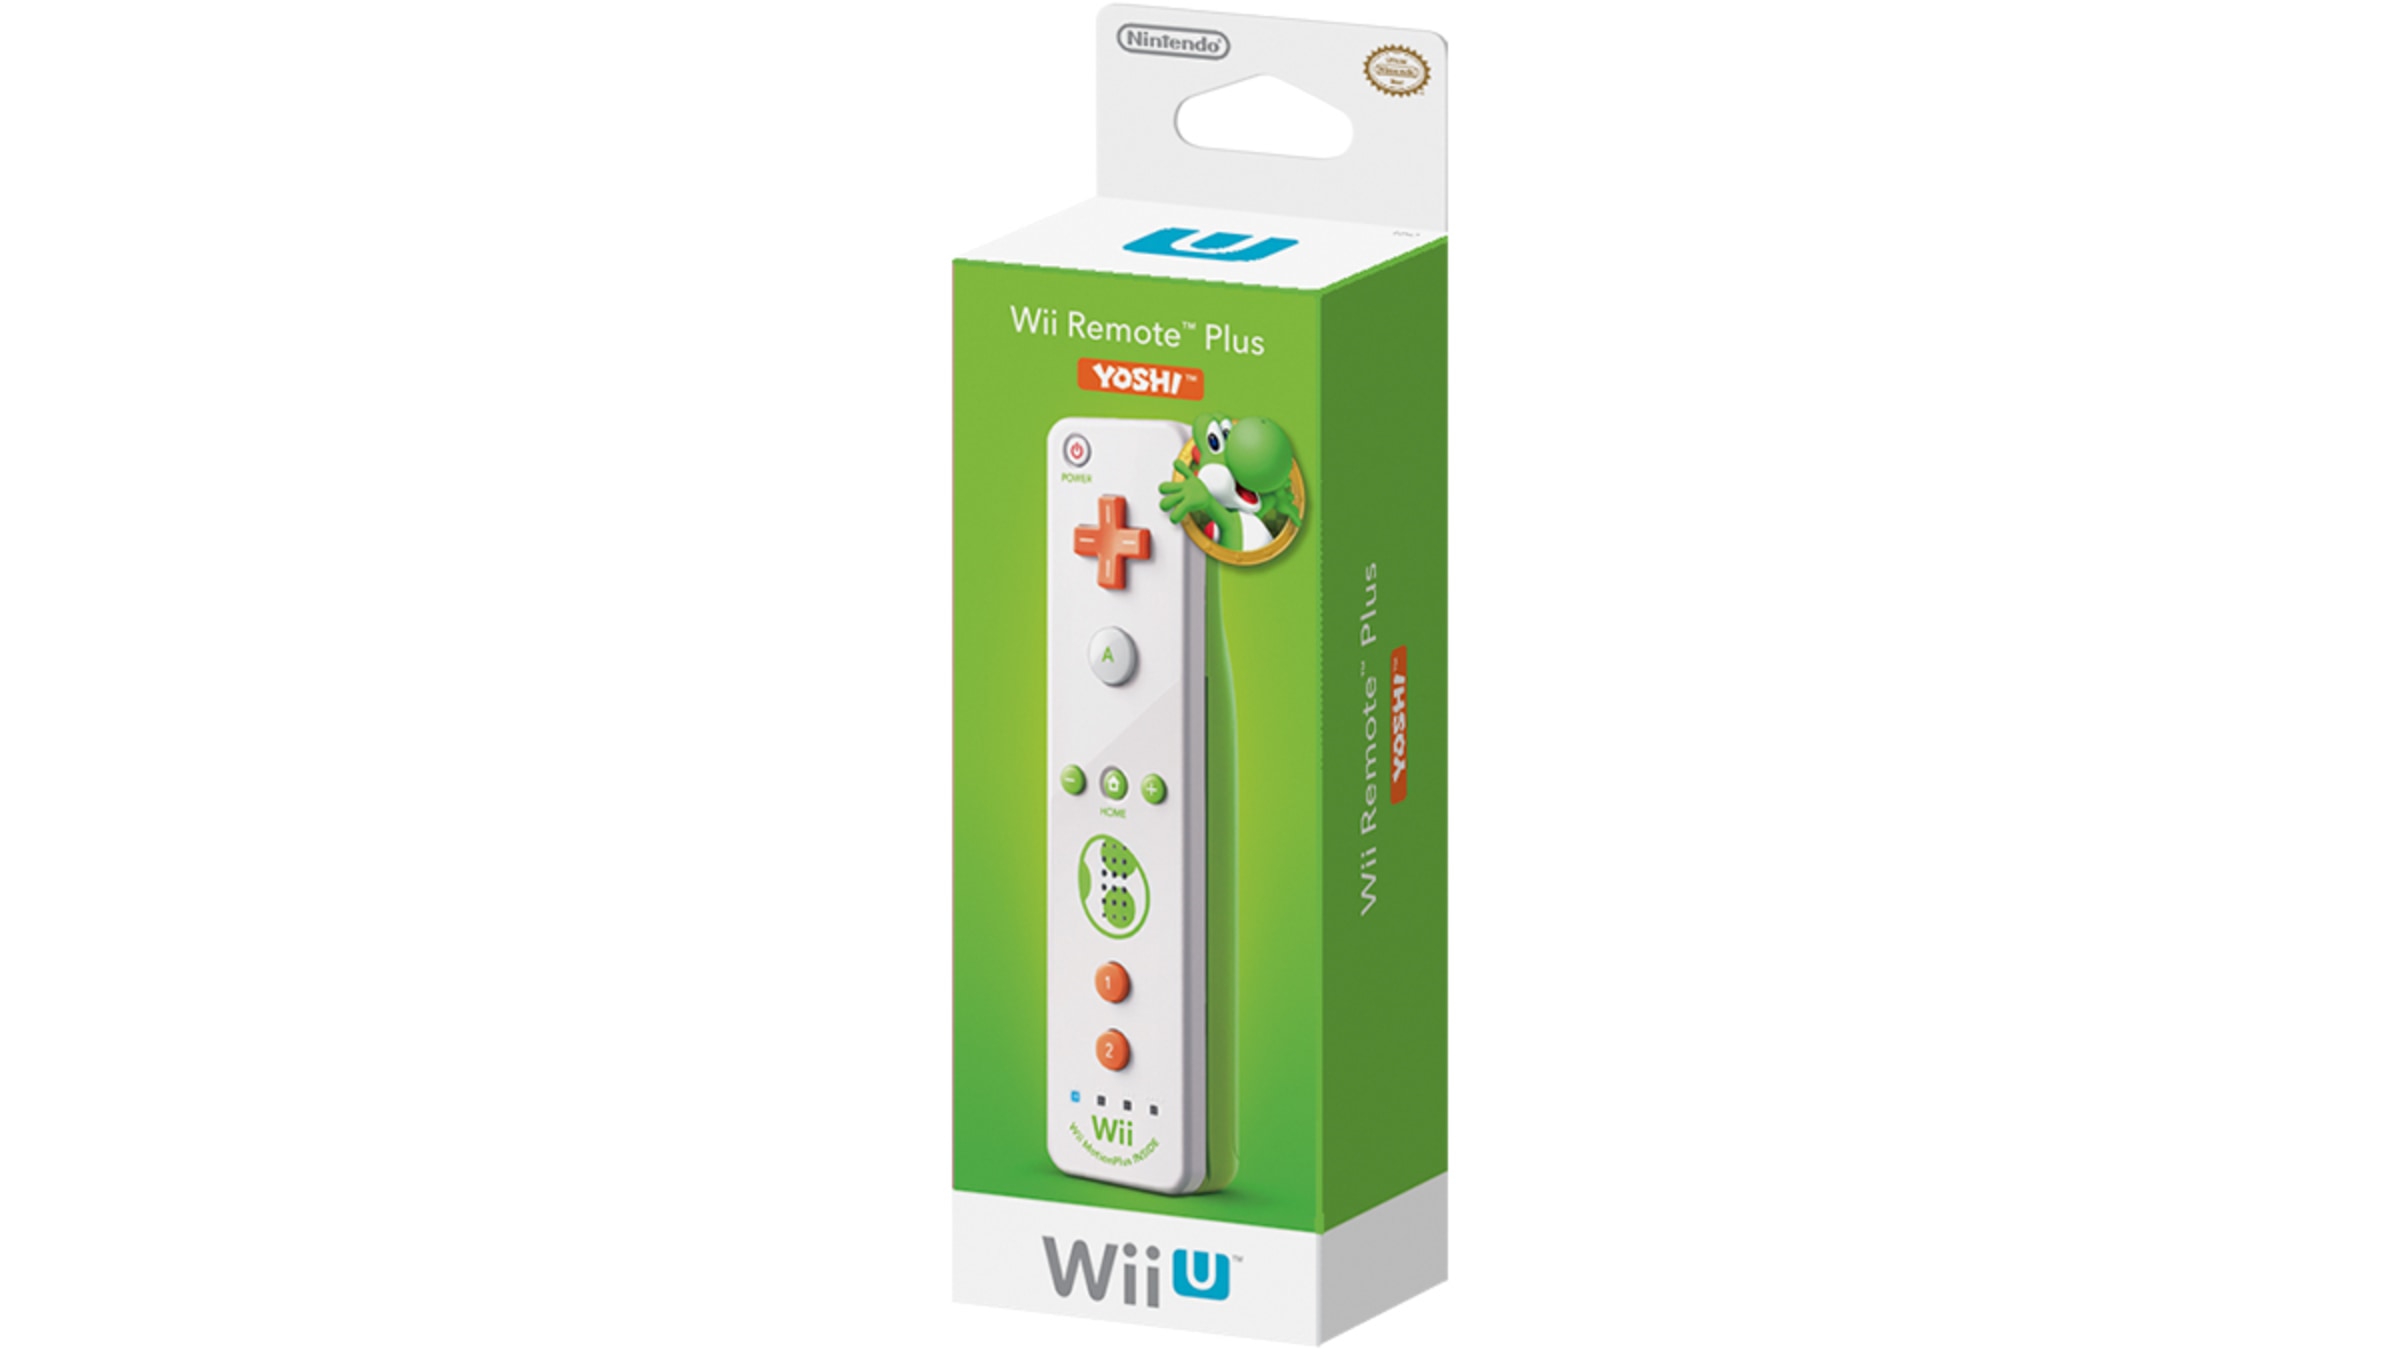 Wii Remote Plus - Yoshi - Nintendo